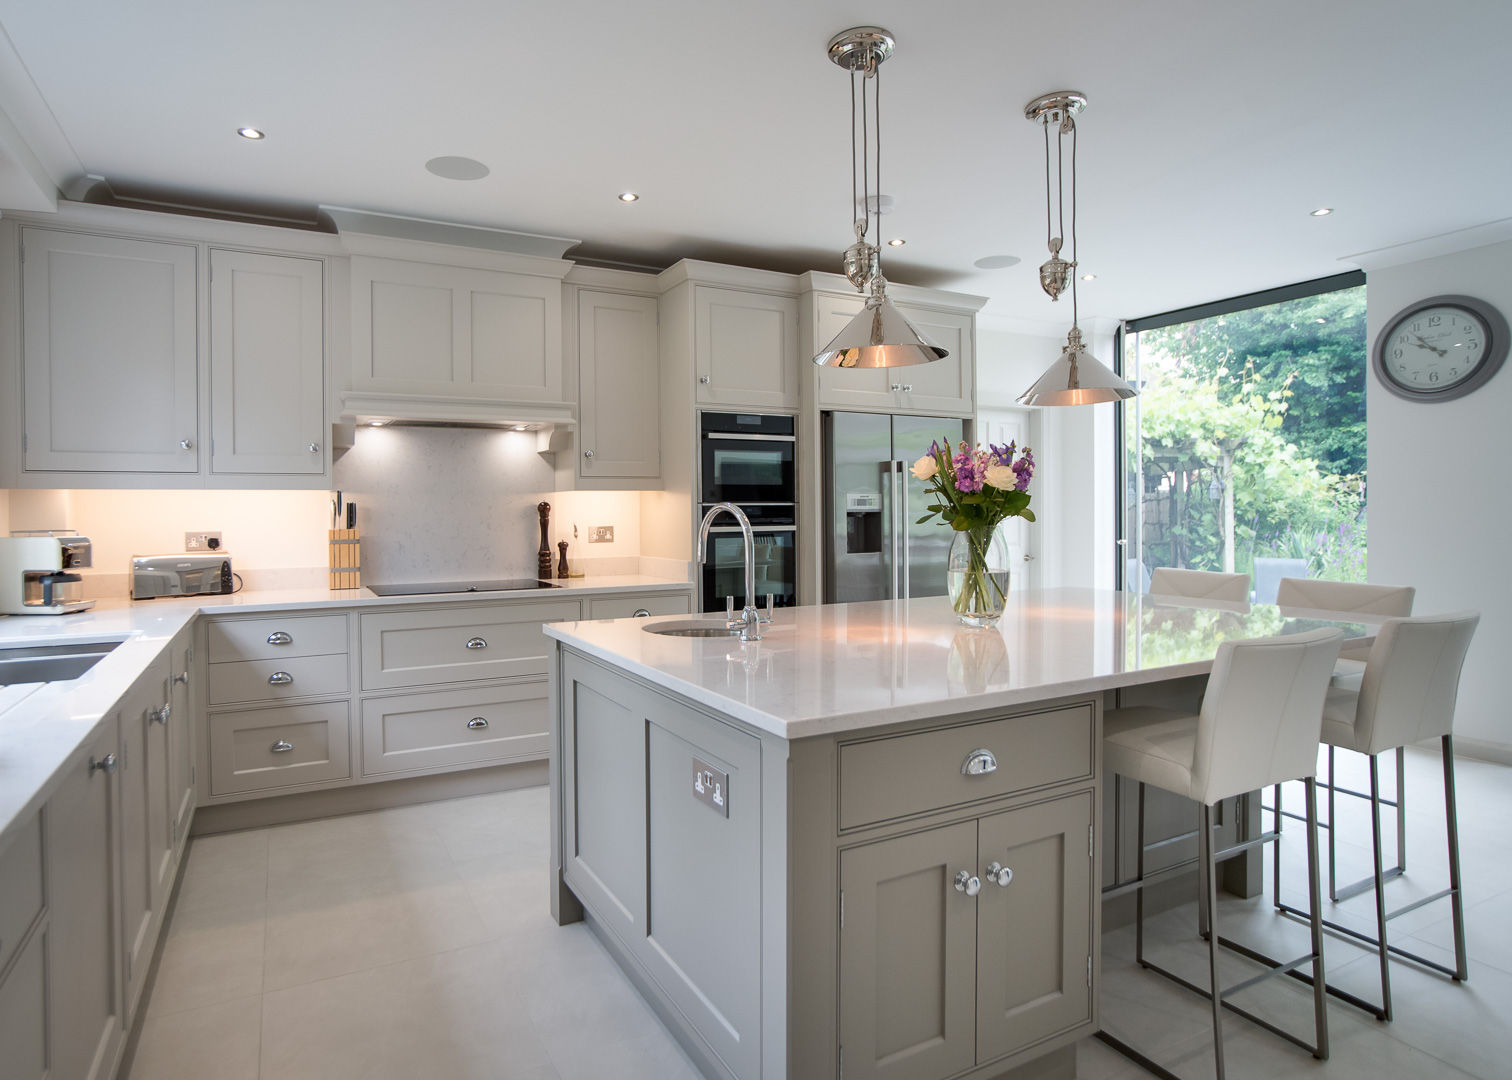 Luxurious, bespoke kitchen by John Ladbury John Ladbury and Company Cozinhas embutidas white,modern,minimalist,quartz